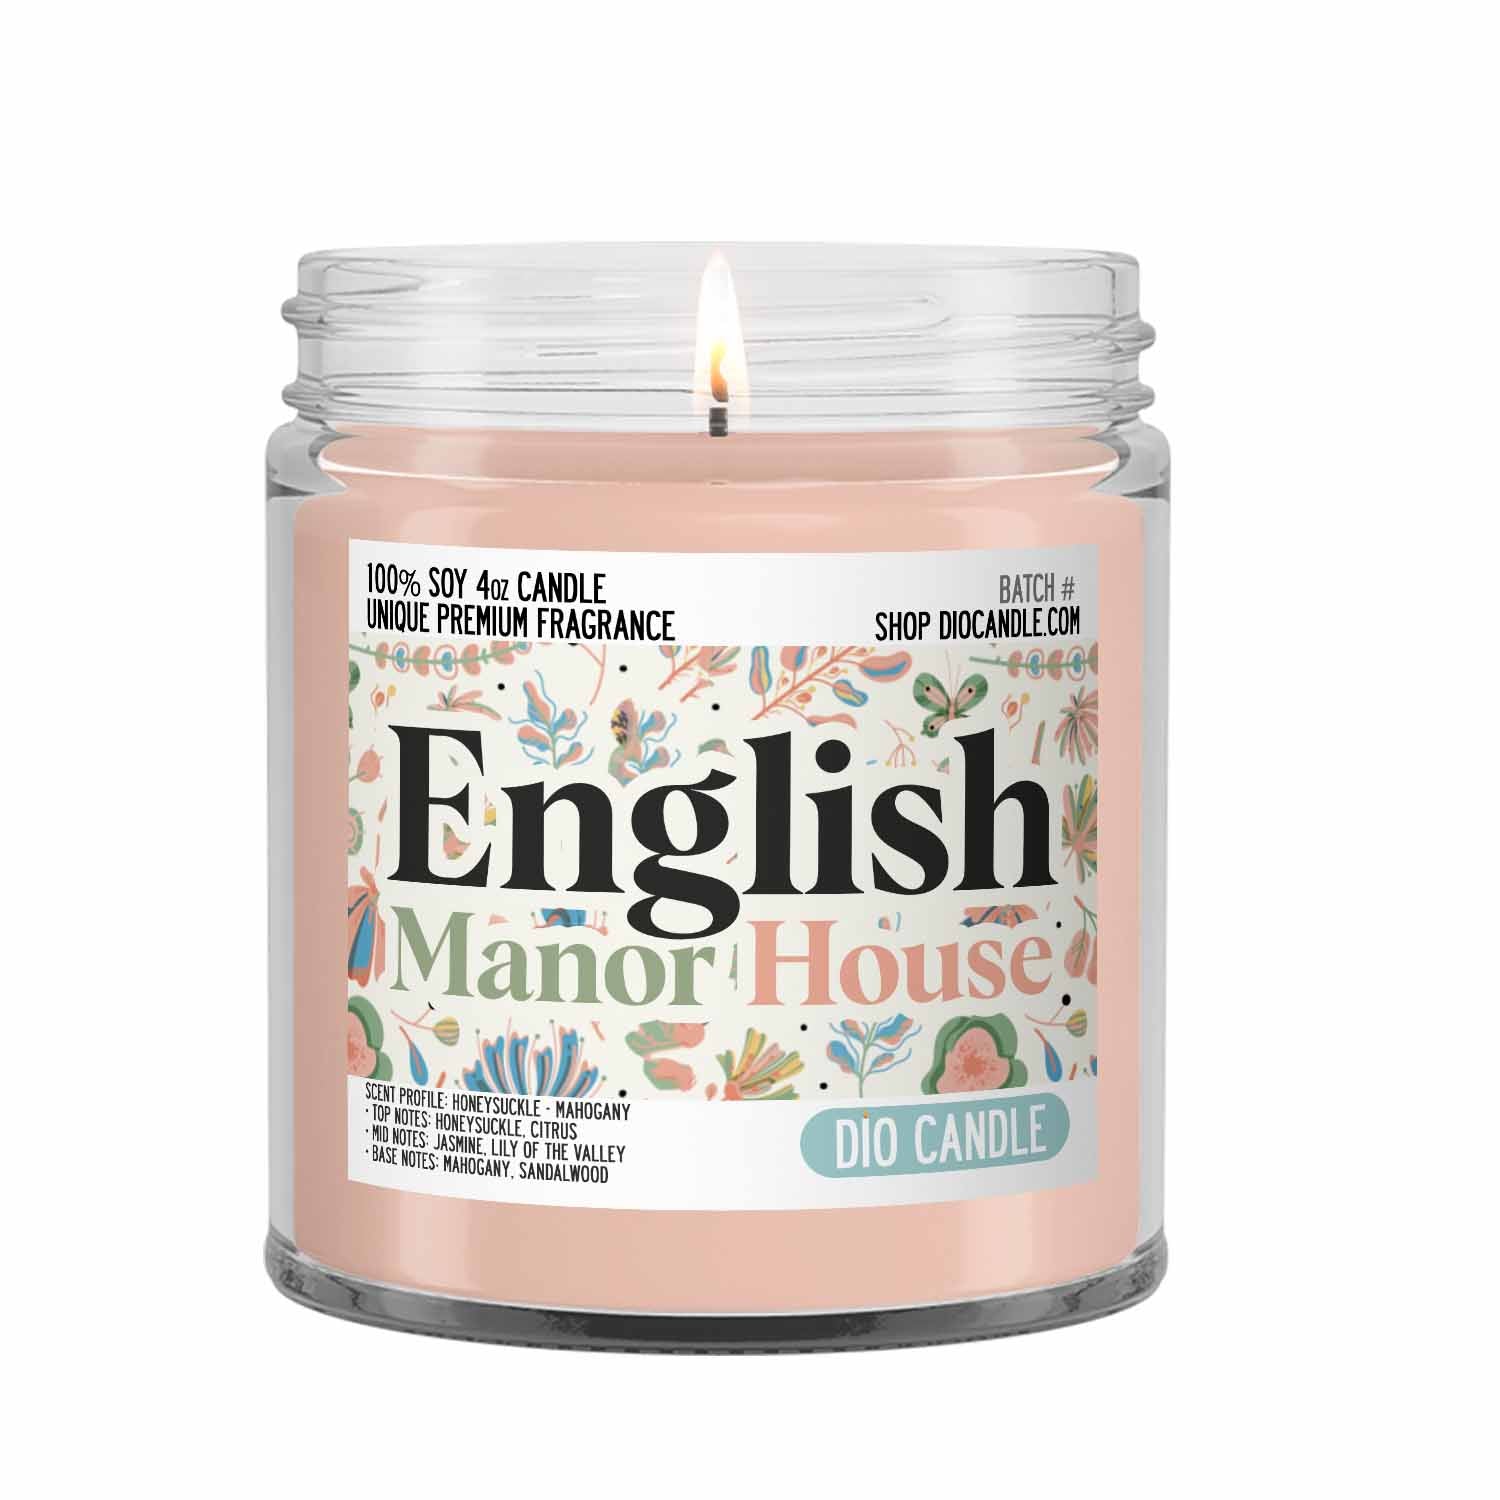 English Manor House Candle